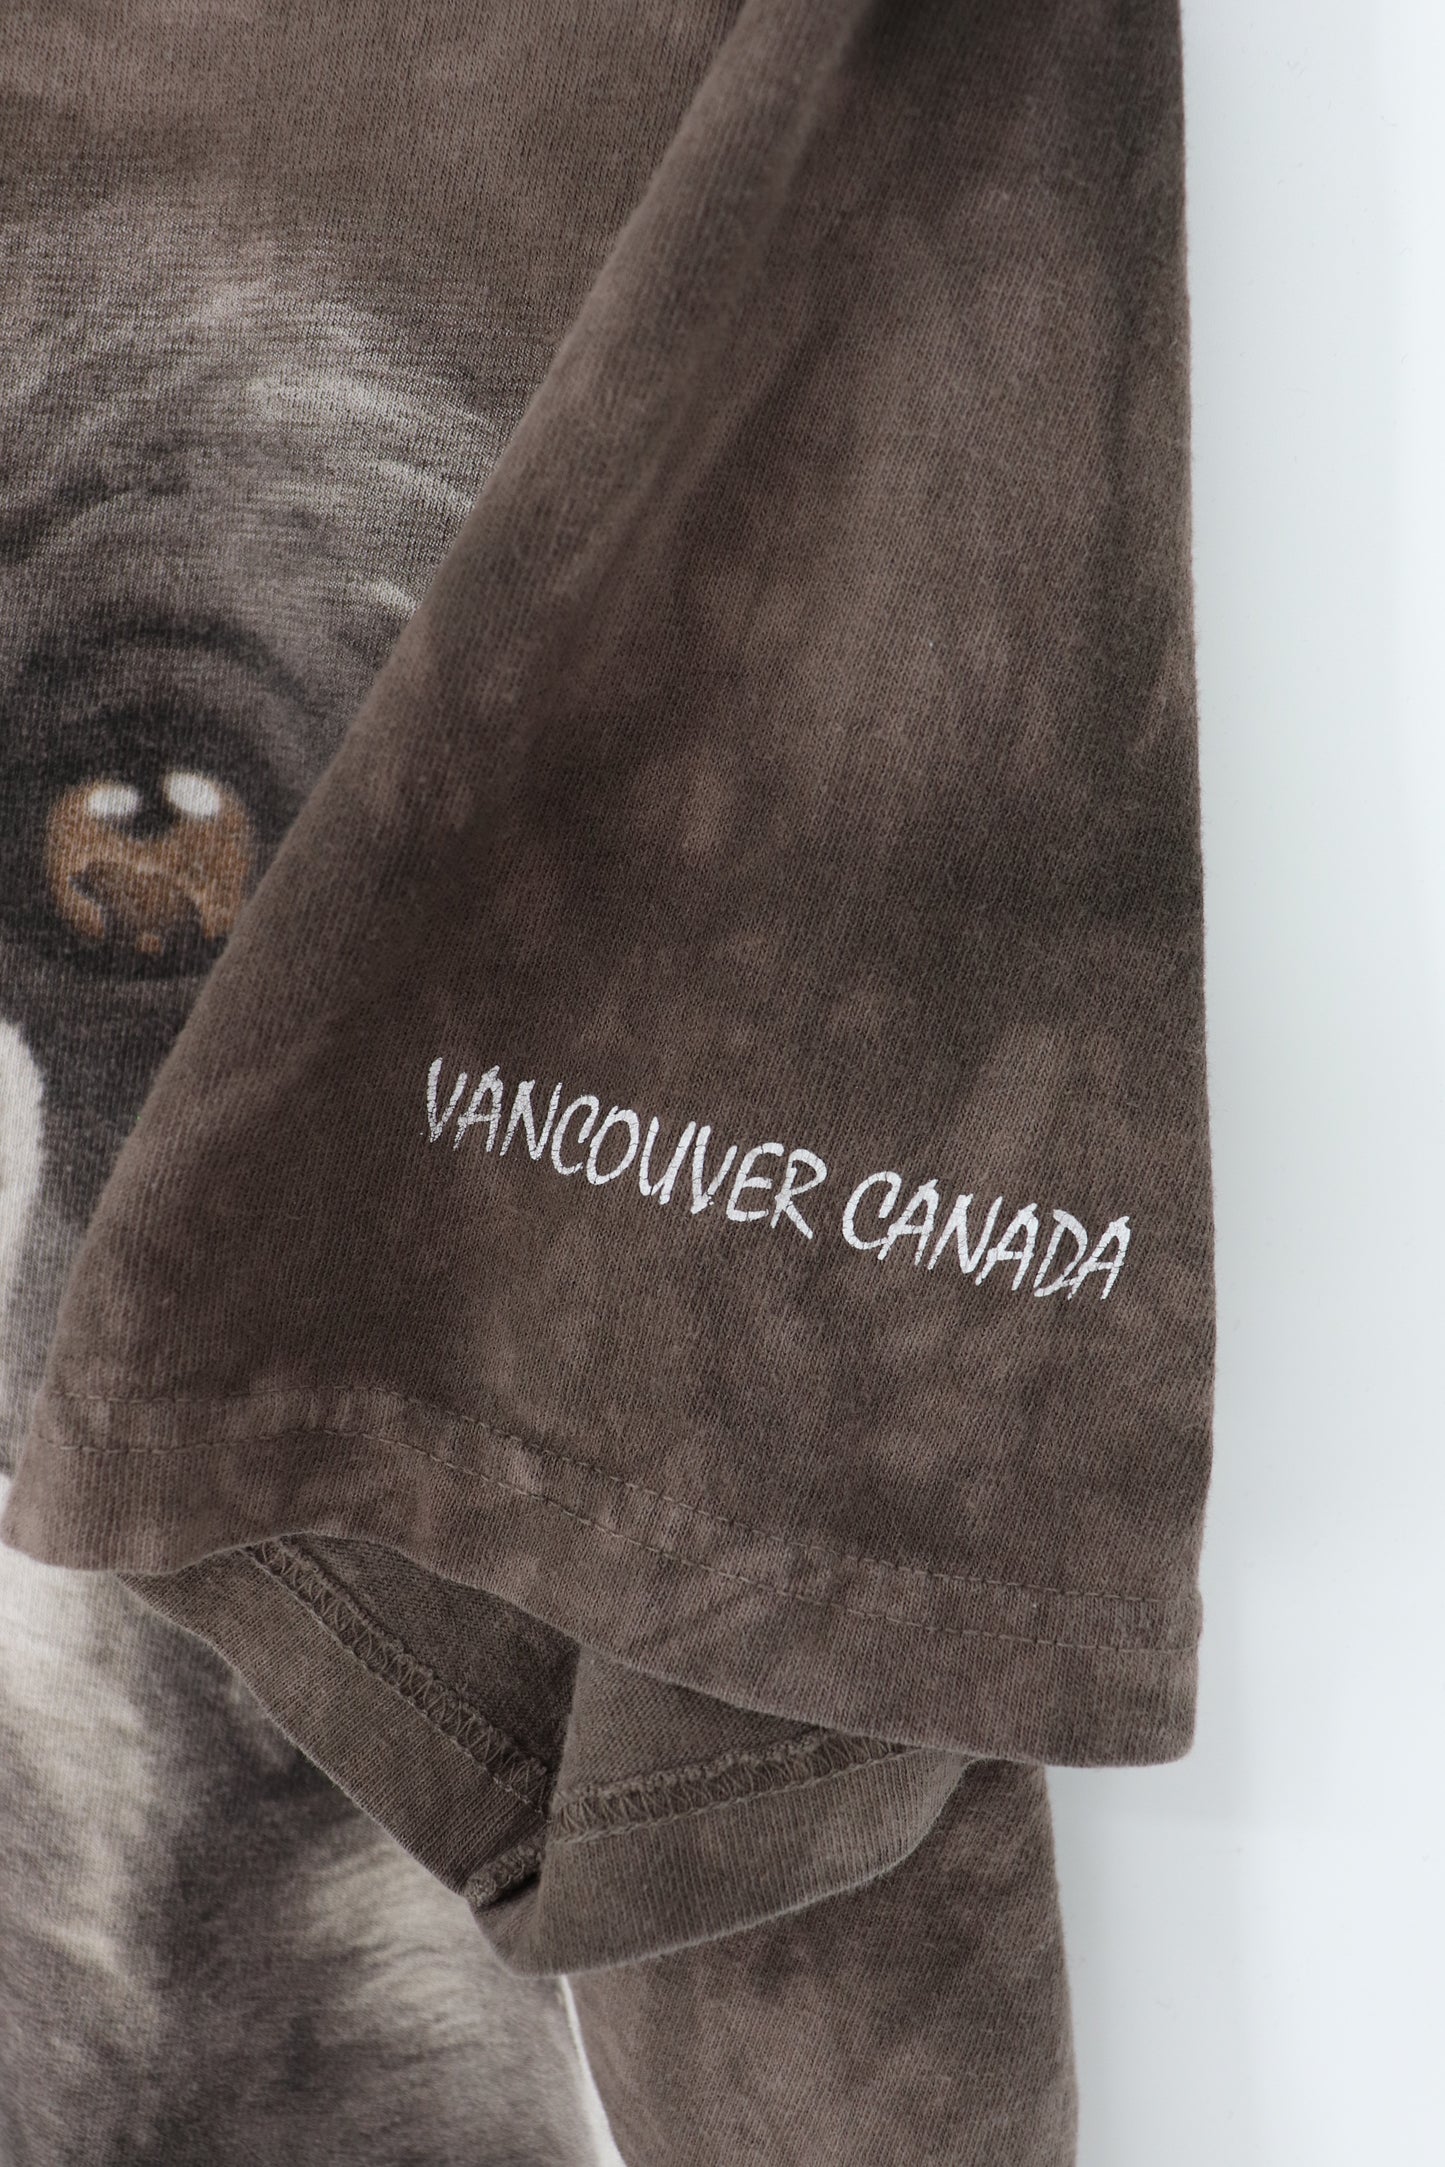 BEARS VANCOUVER CANADA